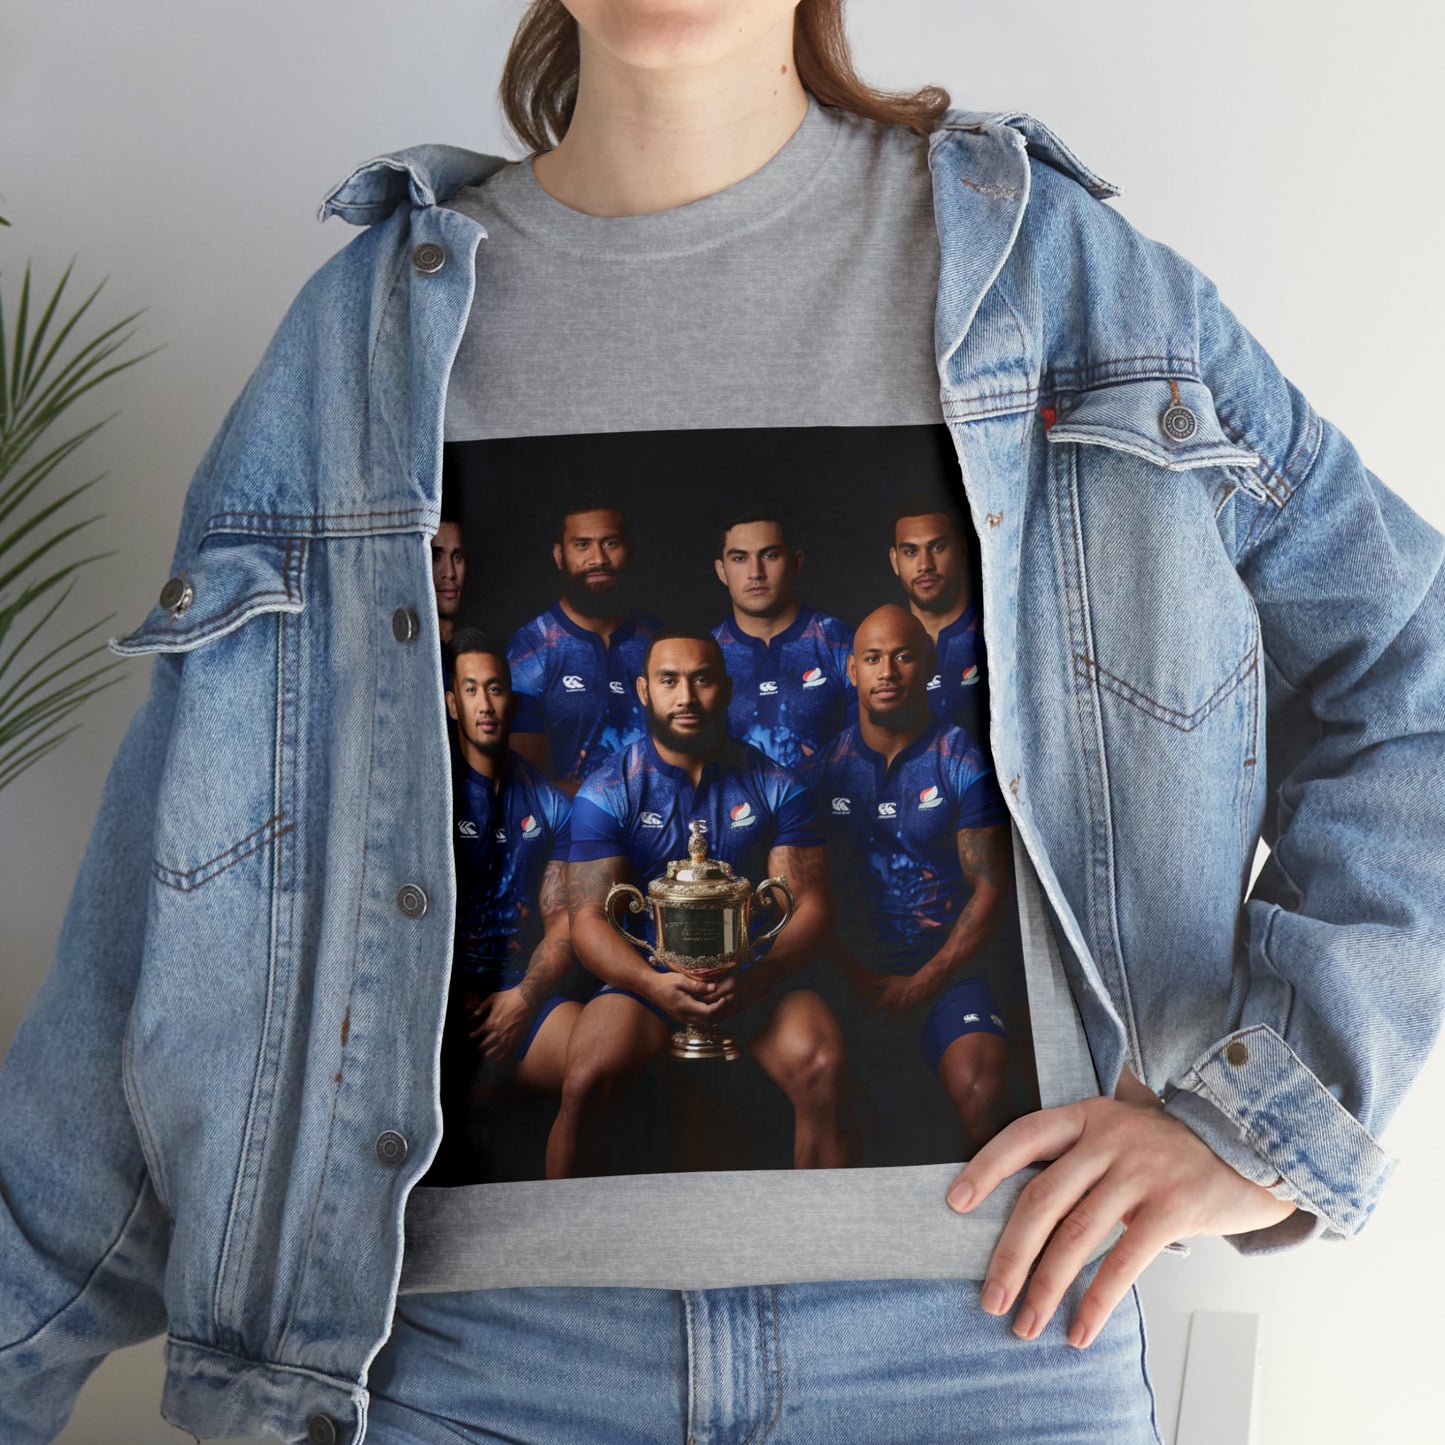 Samoa RWC Photoshoot - light shirts